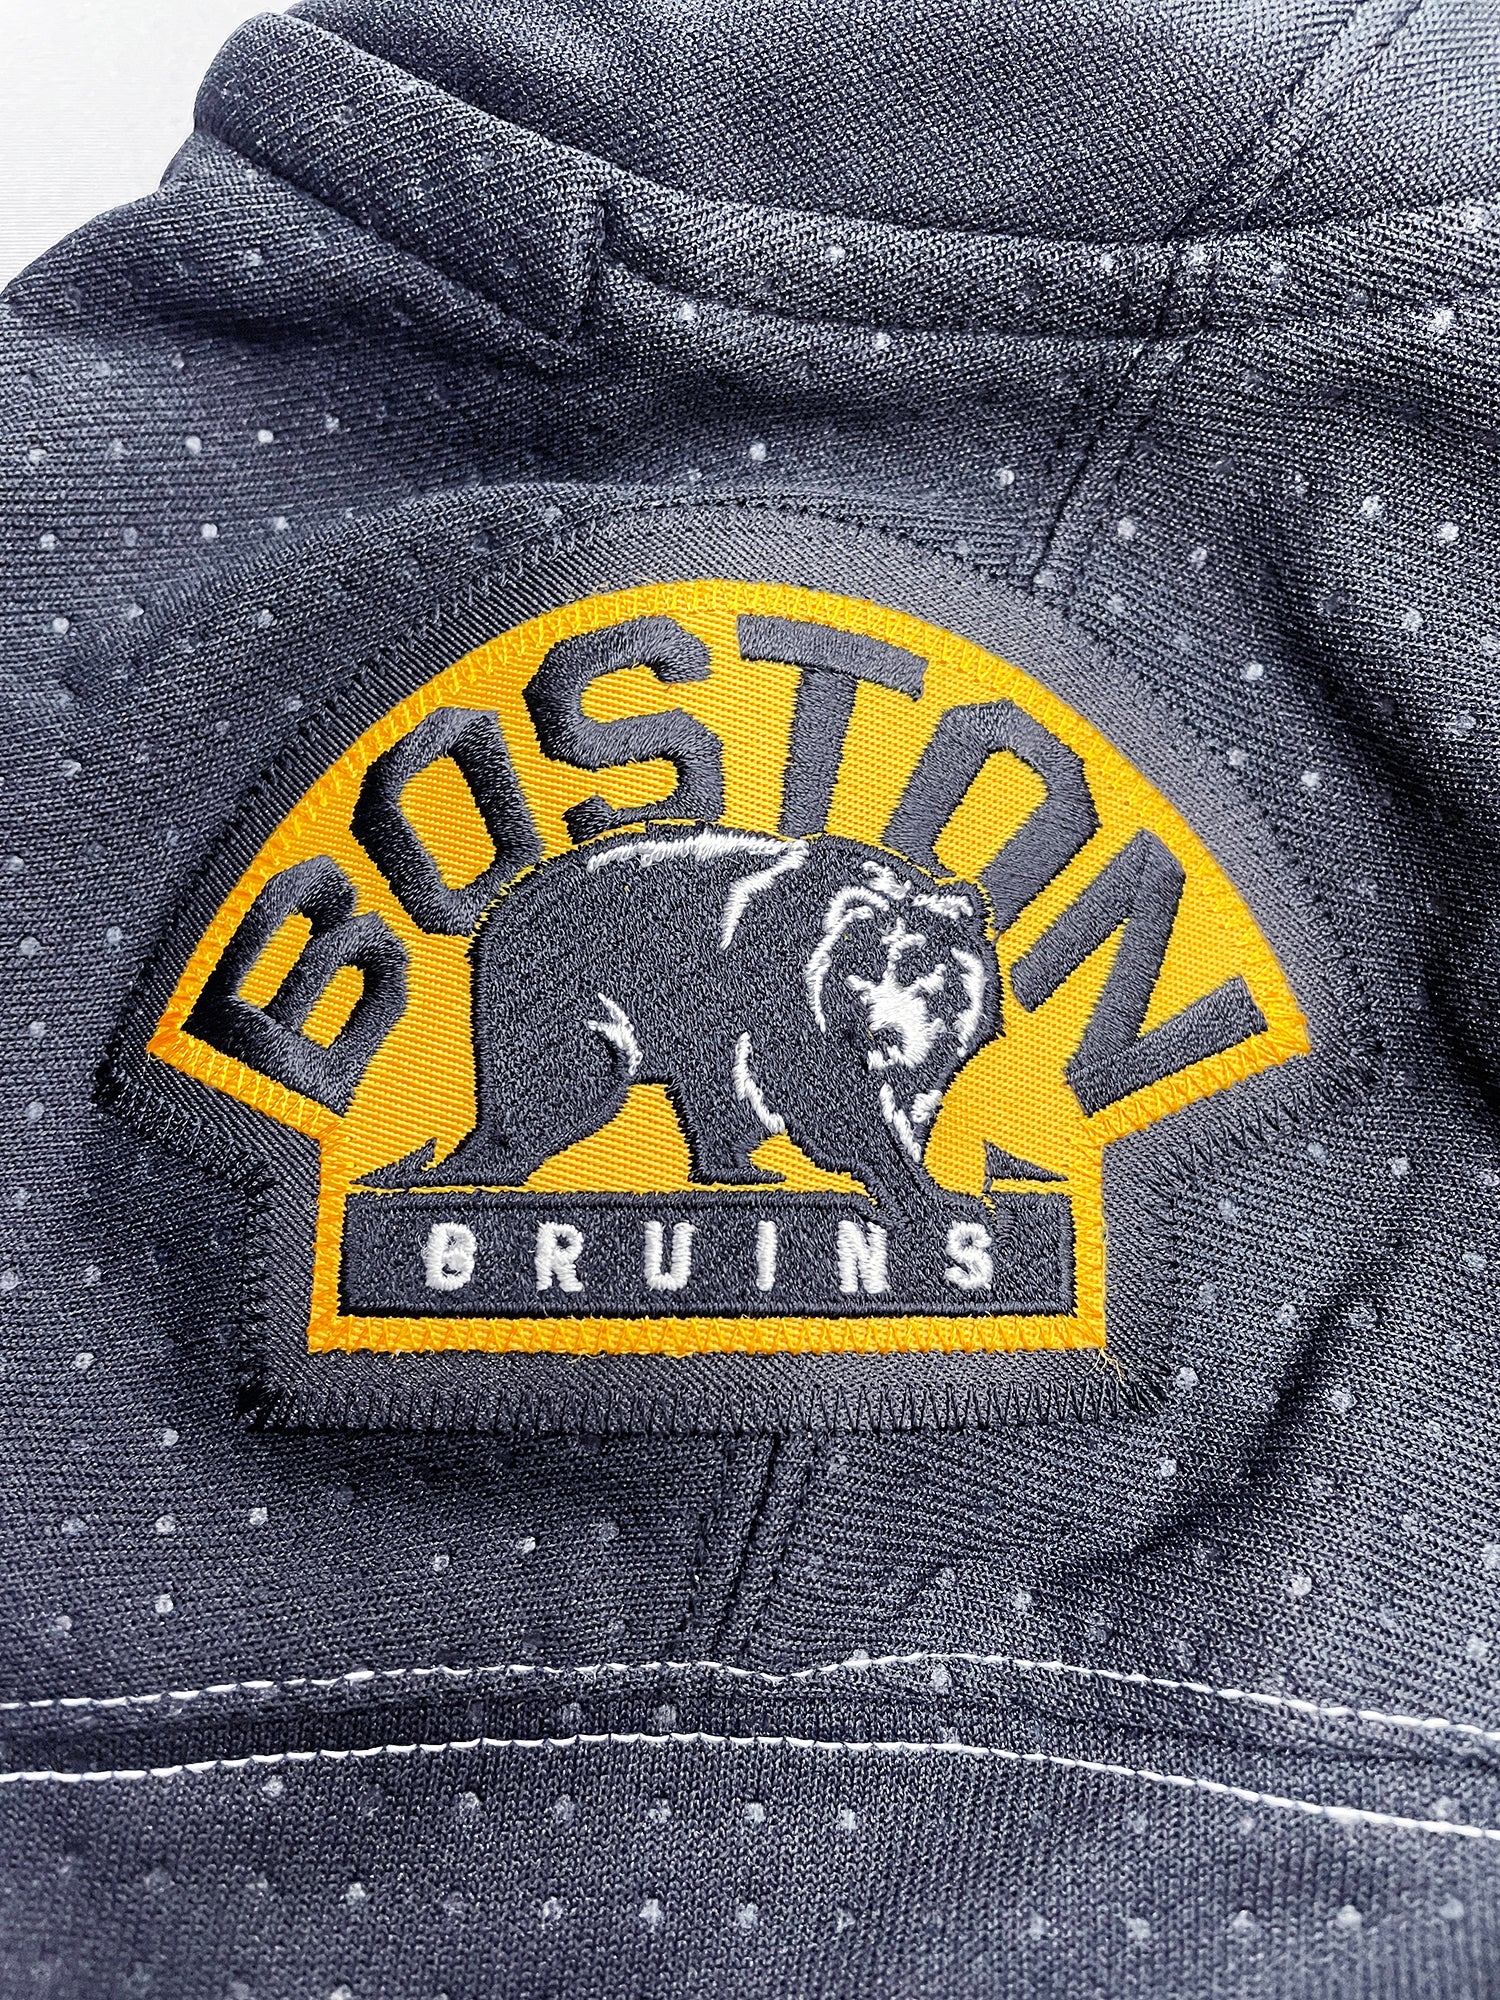 Zdeno Chara Boston Bruins Adidas Authentic Away NHL Hockey Jersey